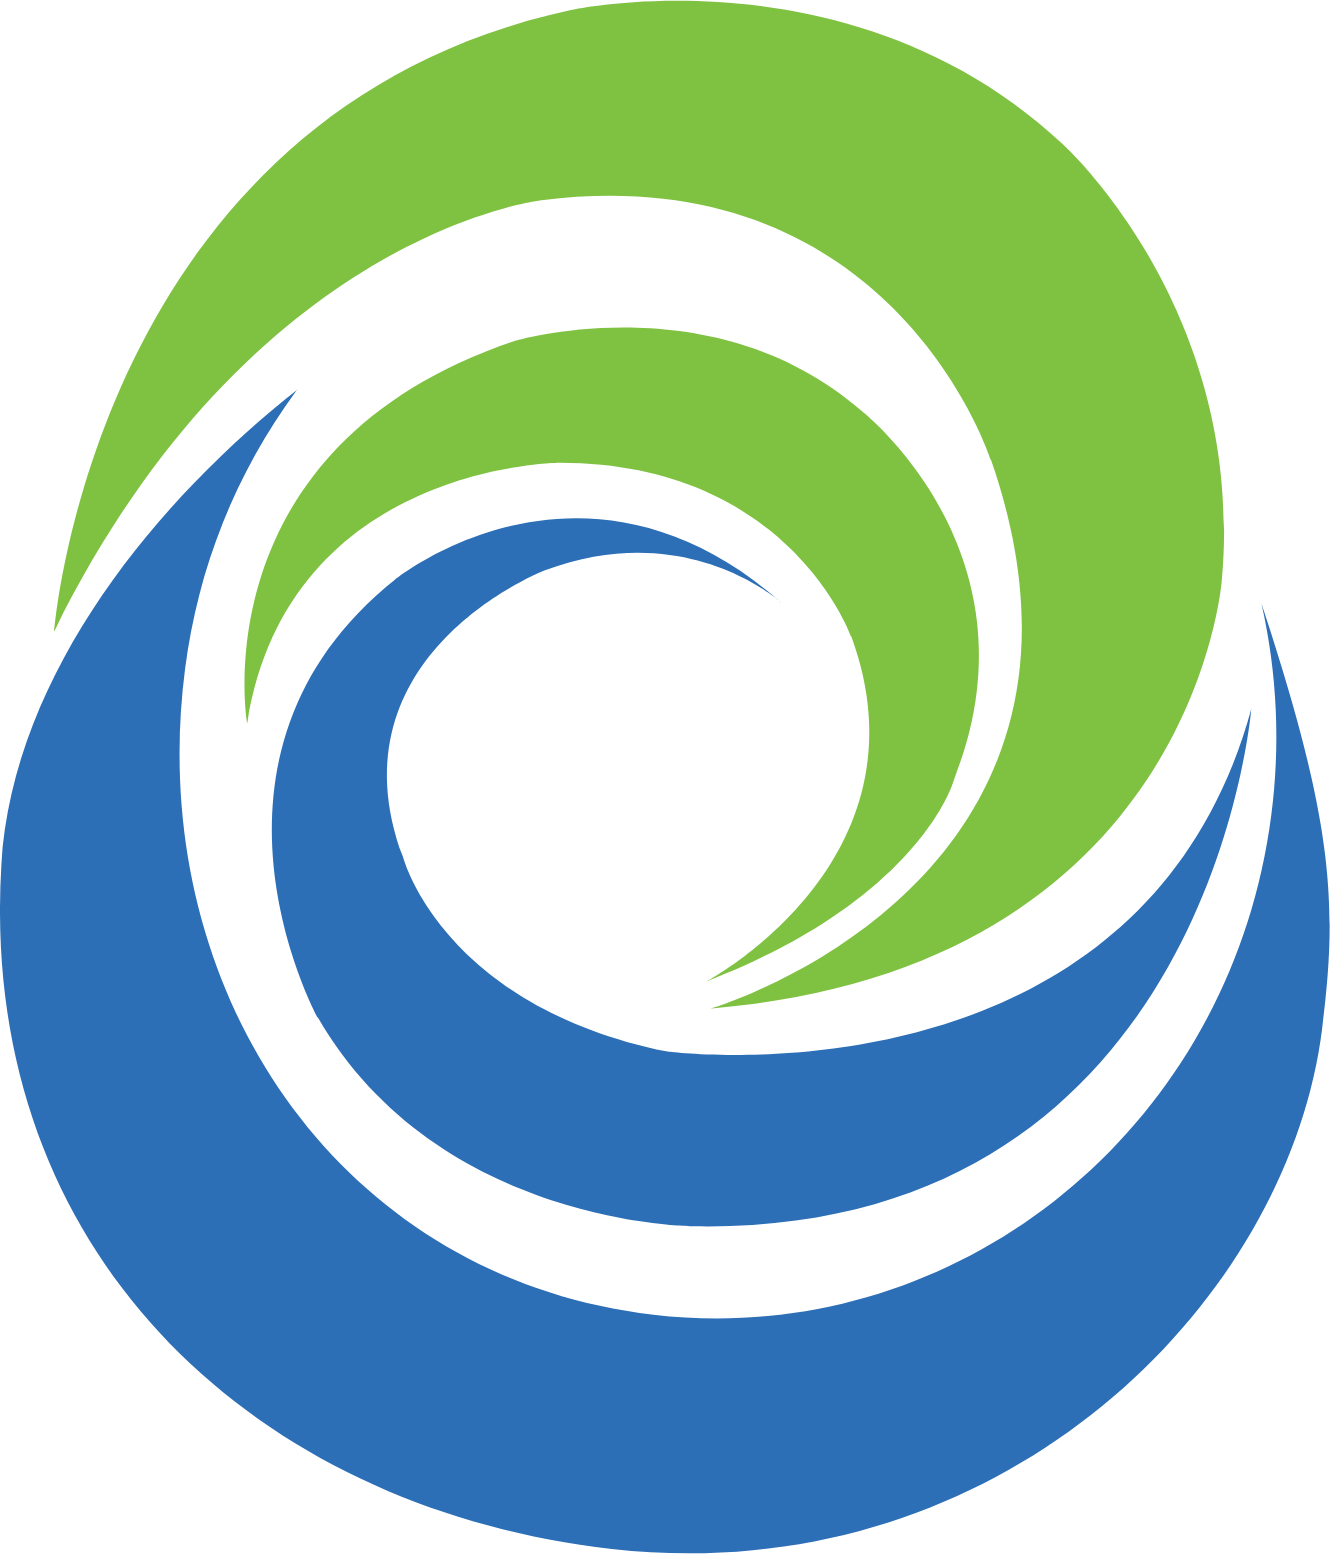 W&T Offshore logo (transparent PNG)